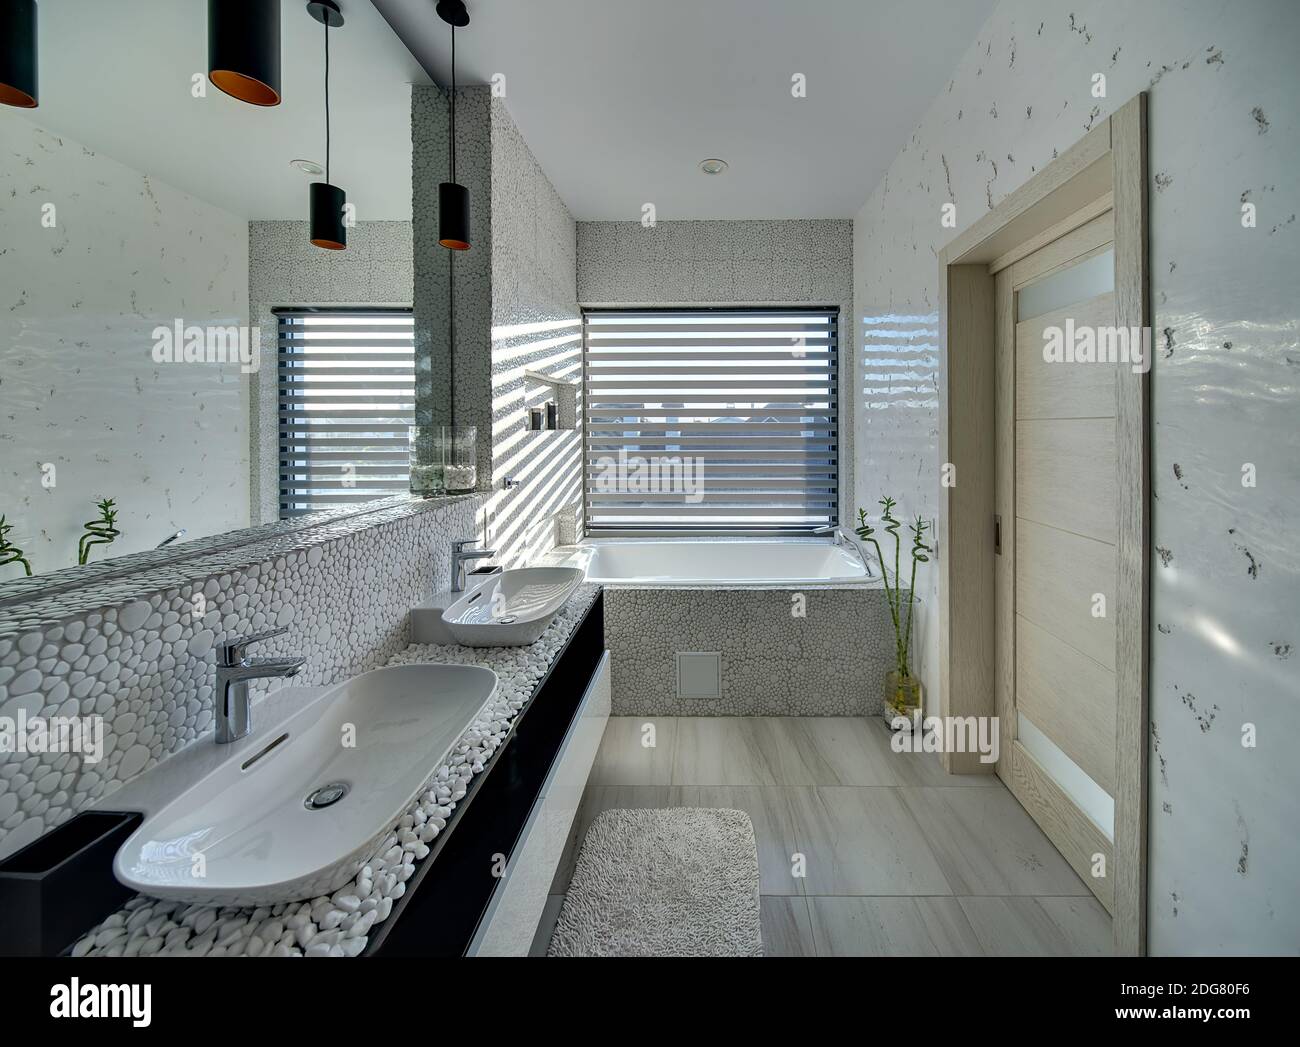 Bathroom in modern style Stock Photo